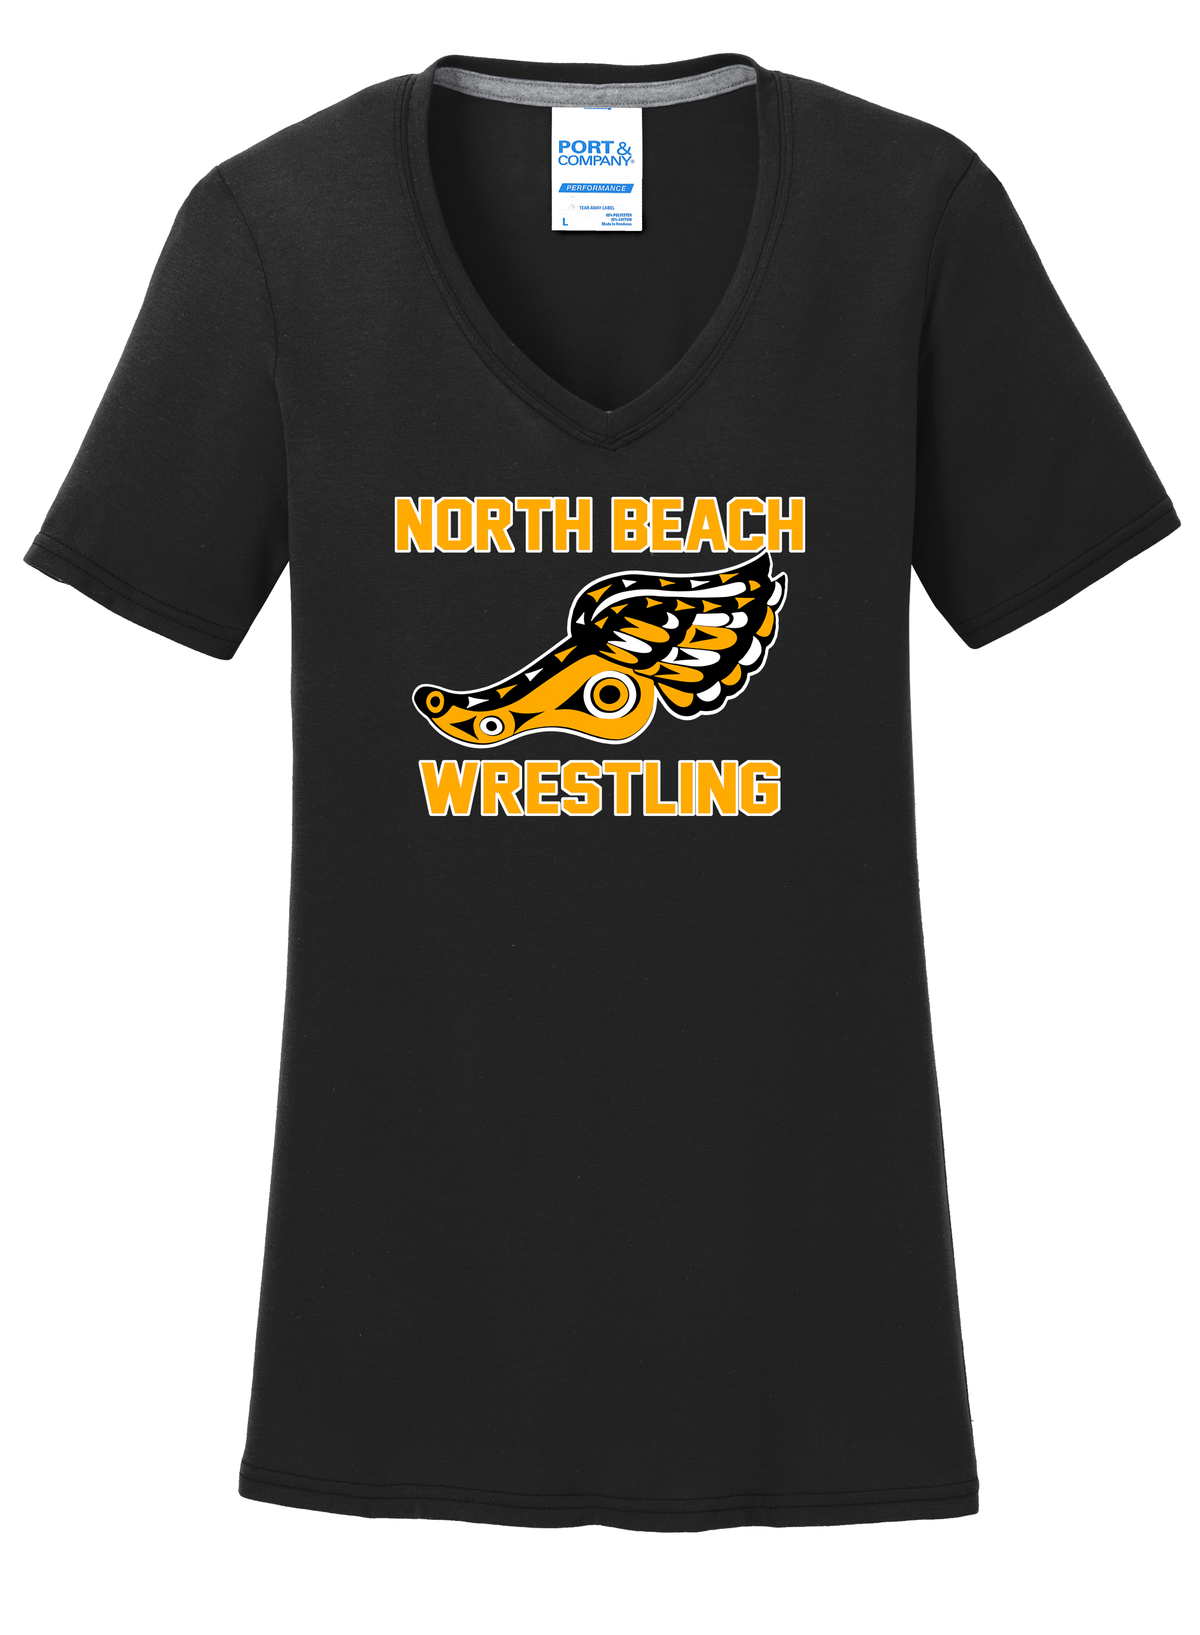 North Beach Wrestling Women's Black T-Shirt